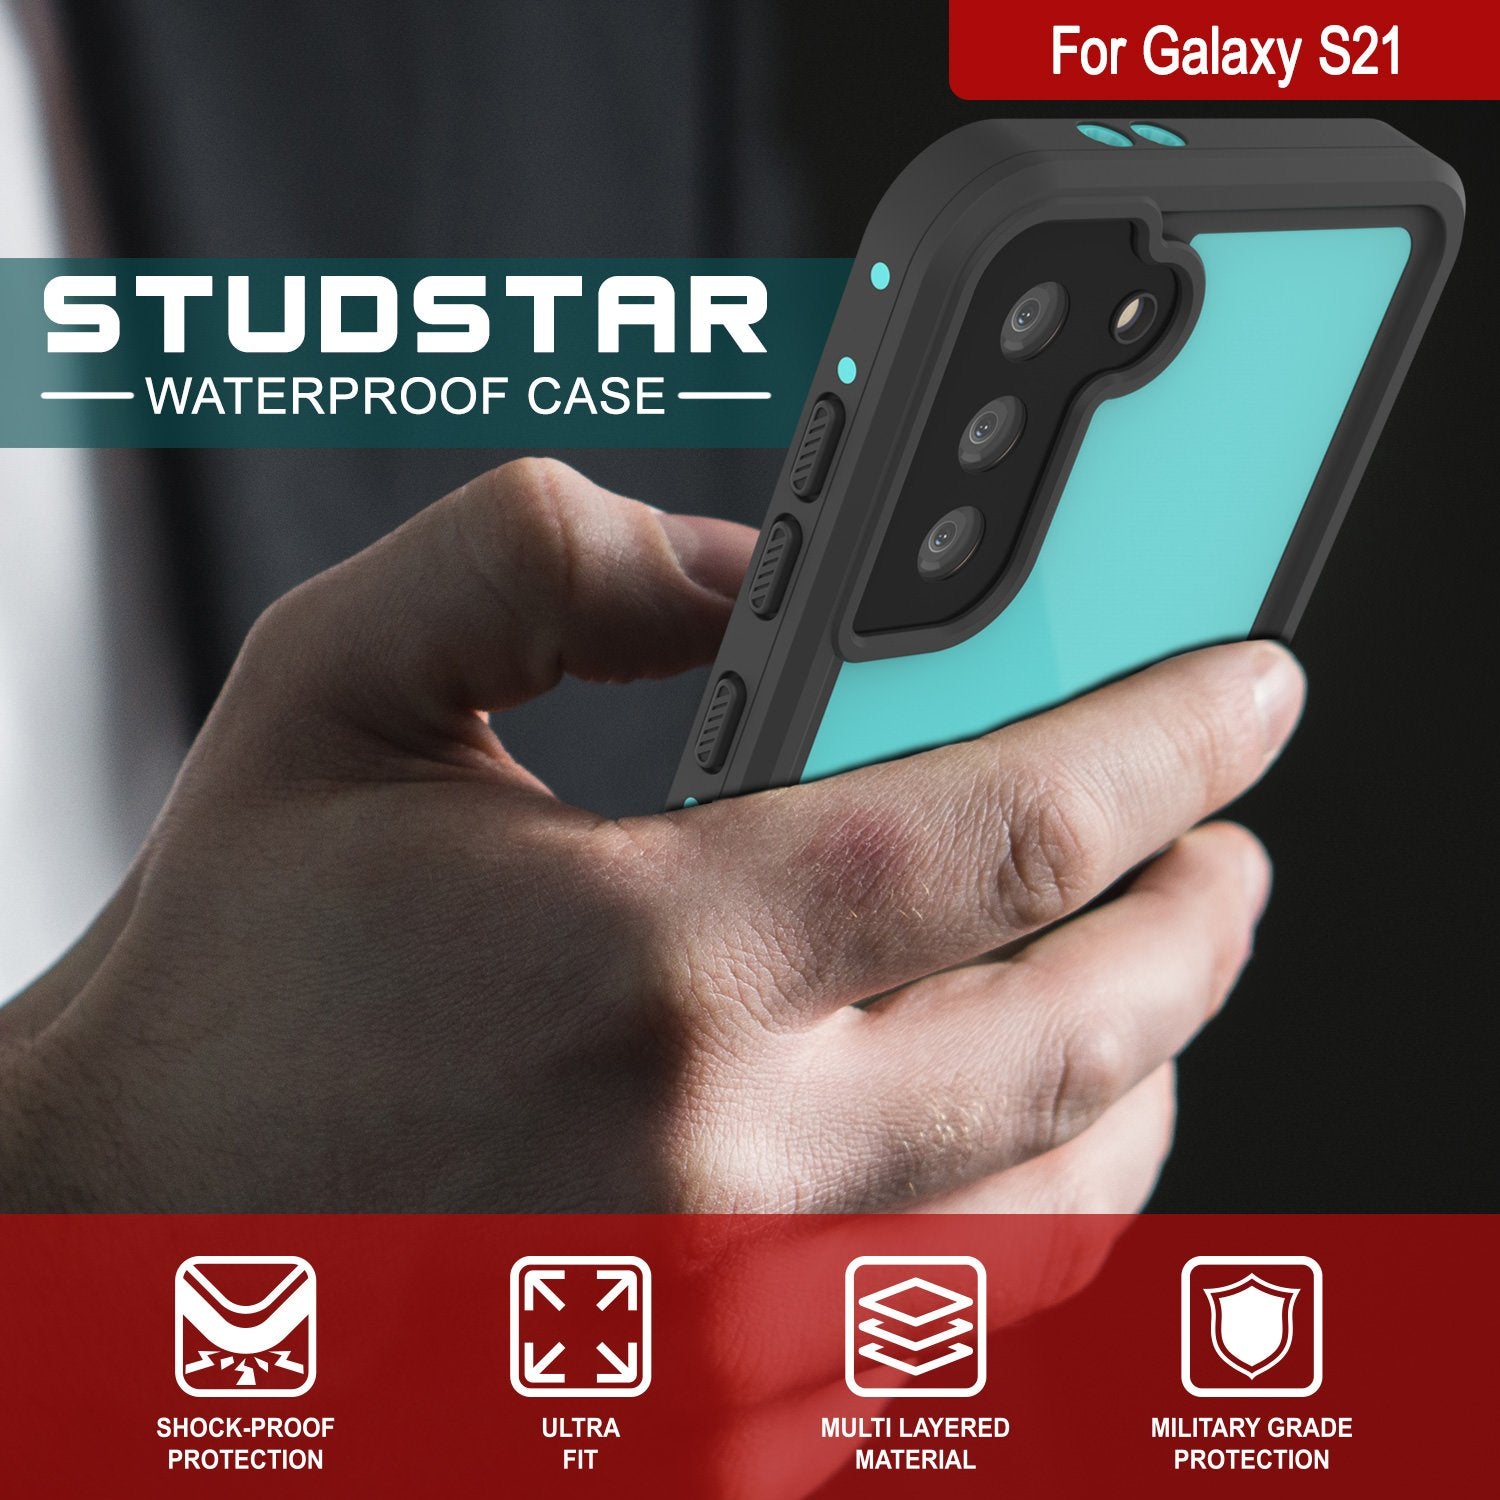 Galaxy S21 Waterproof Case PunkCase StudStar Teal Thin 6.6ft Underwater IP68 Shock/Snow Proof